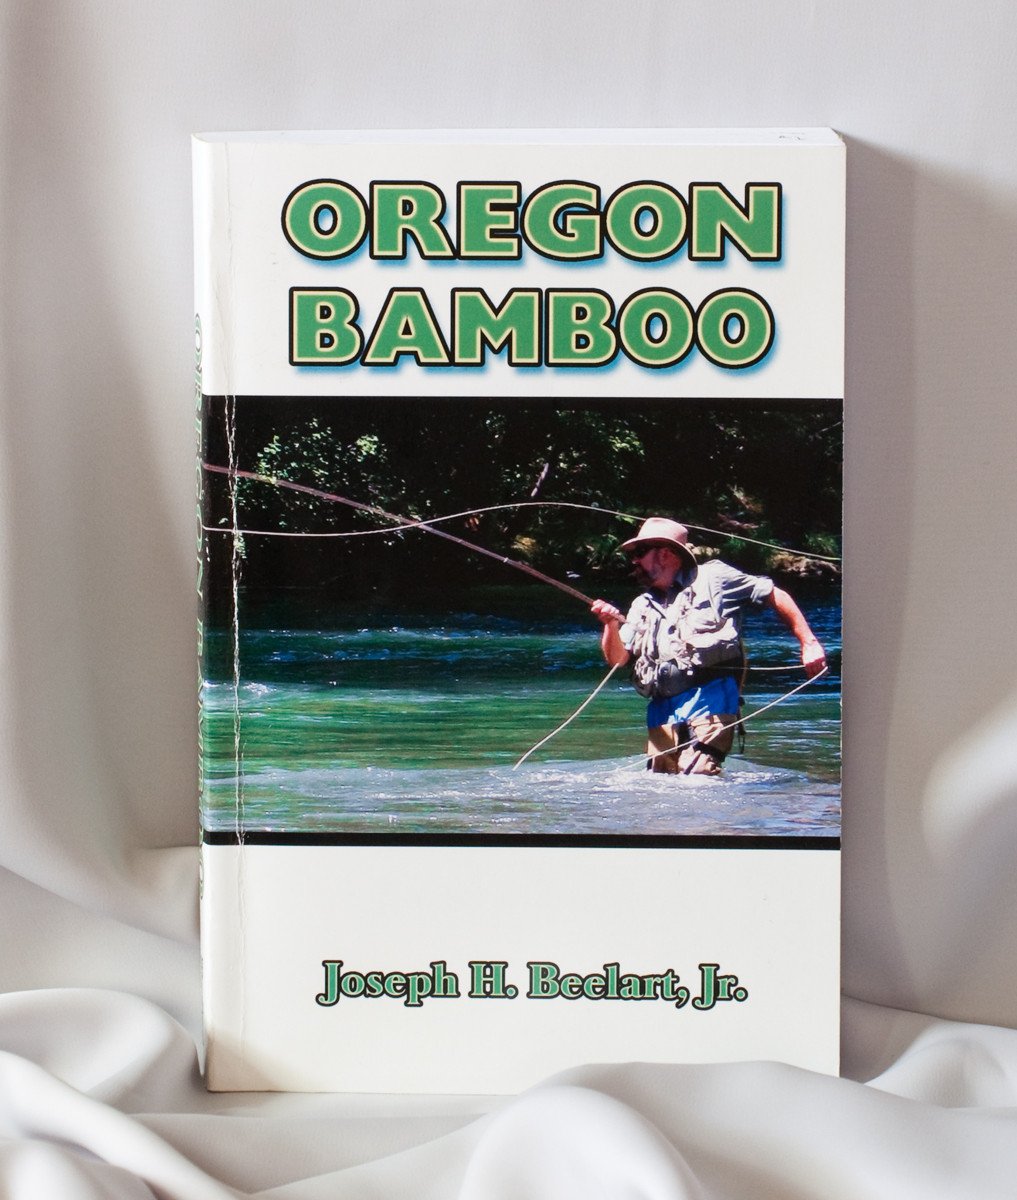 Beelart, Joe - "Oregon Bamboo"